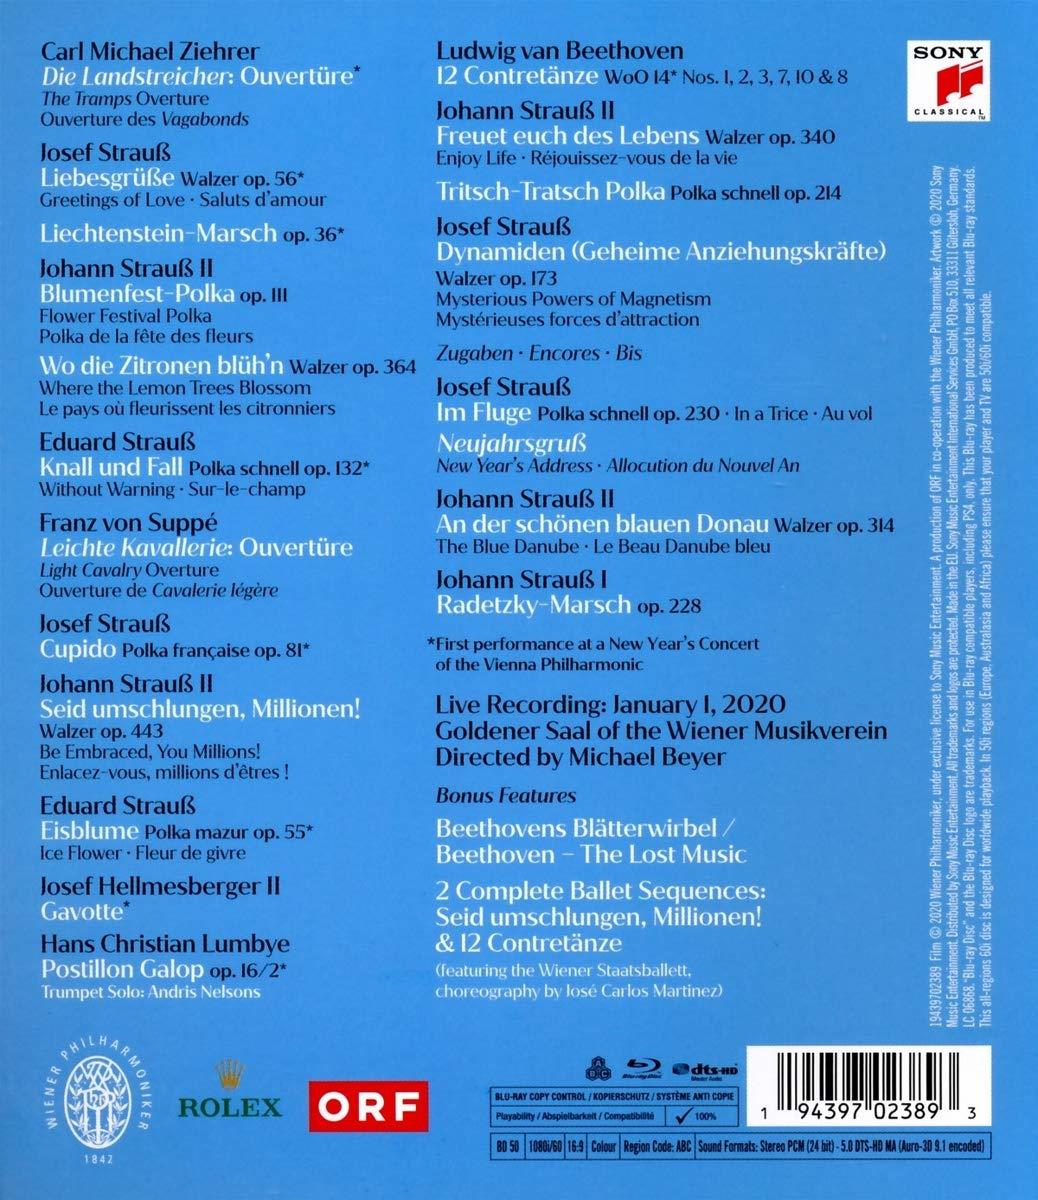 Wiener - - 2020 Philharmoniker (Blu-ray) Neujahrskonzert